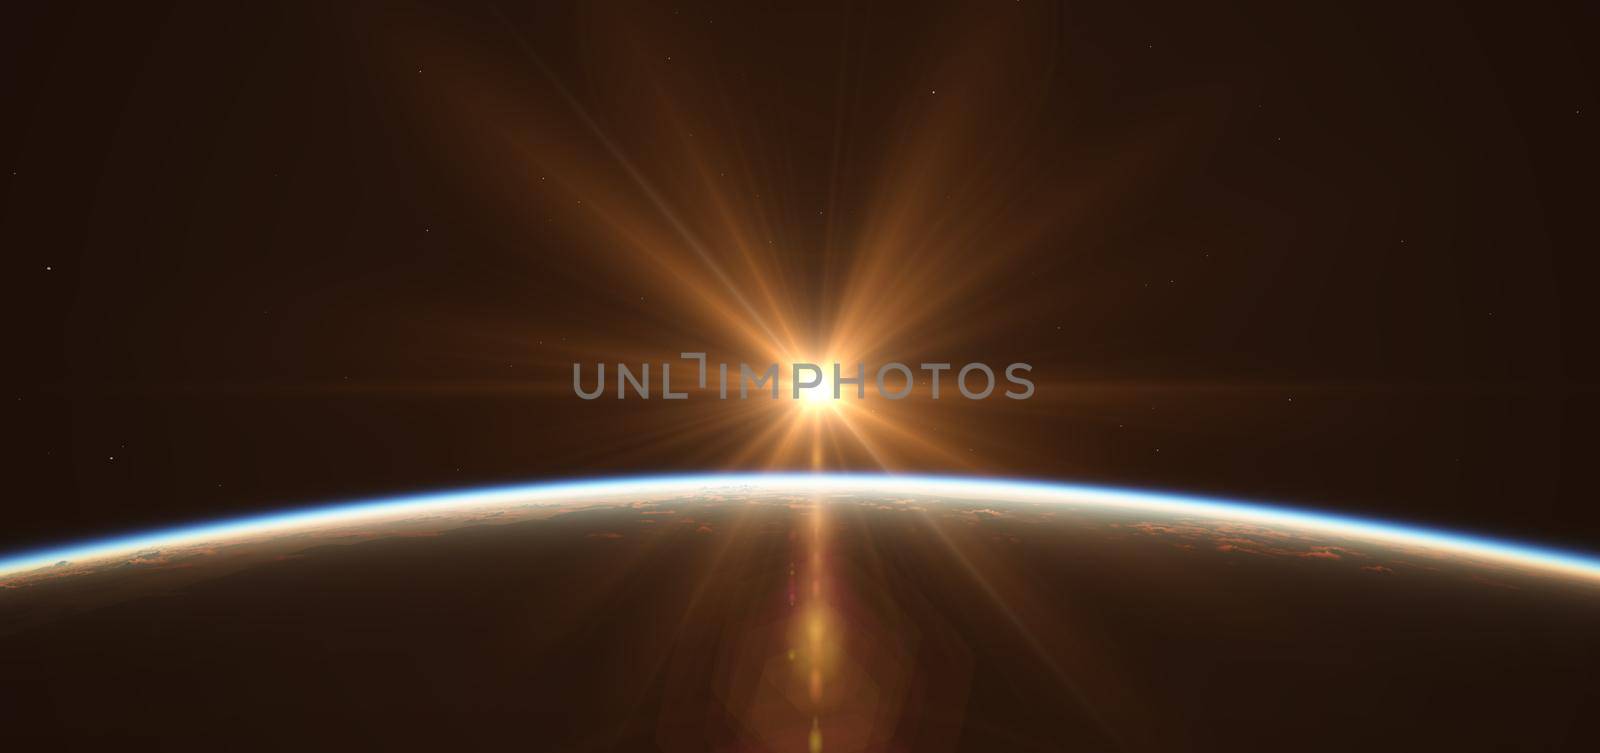 sunrise from planet orbit 3d illustration by alex_nako